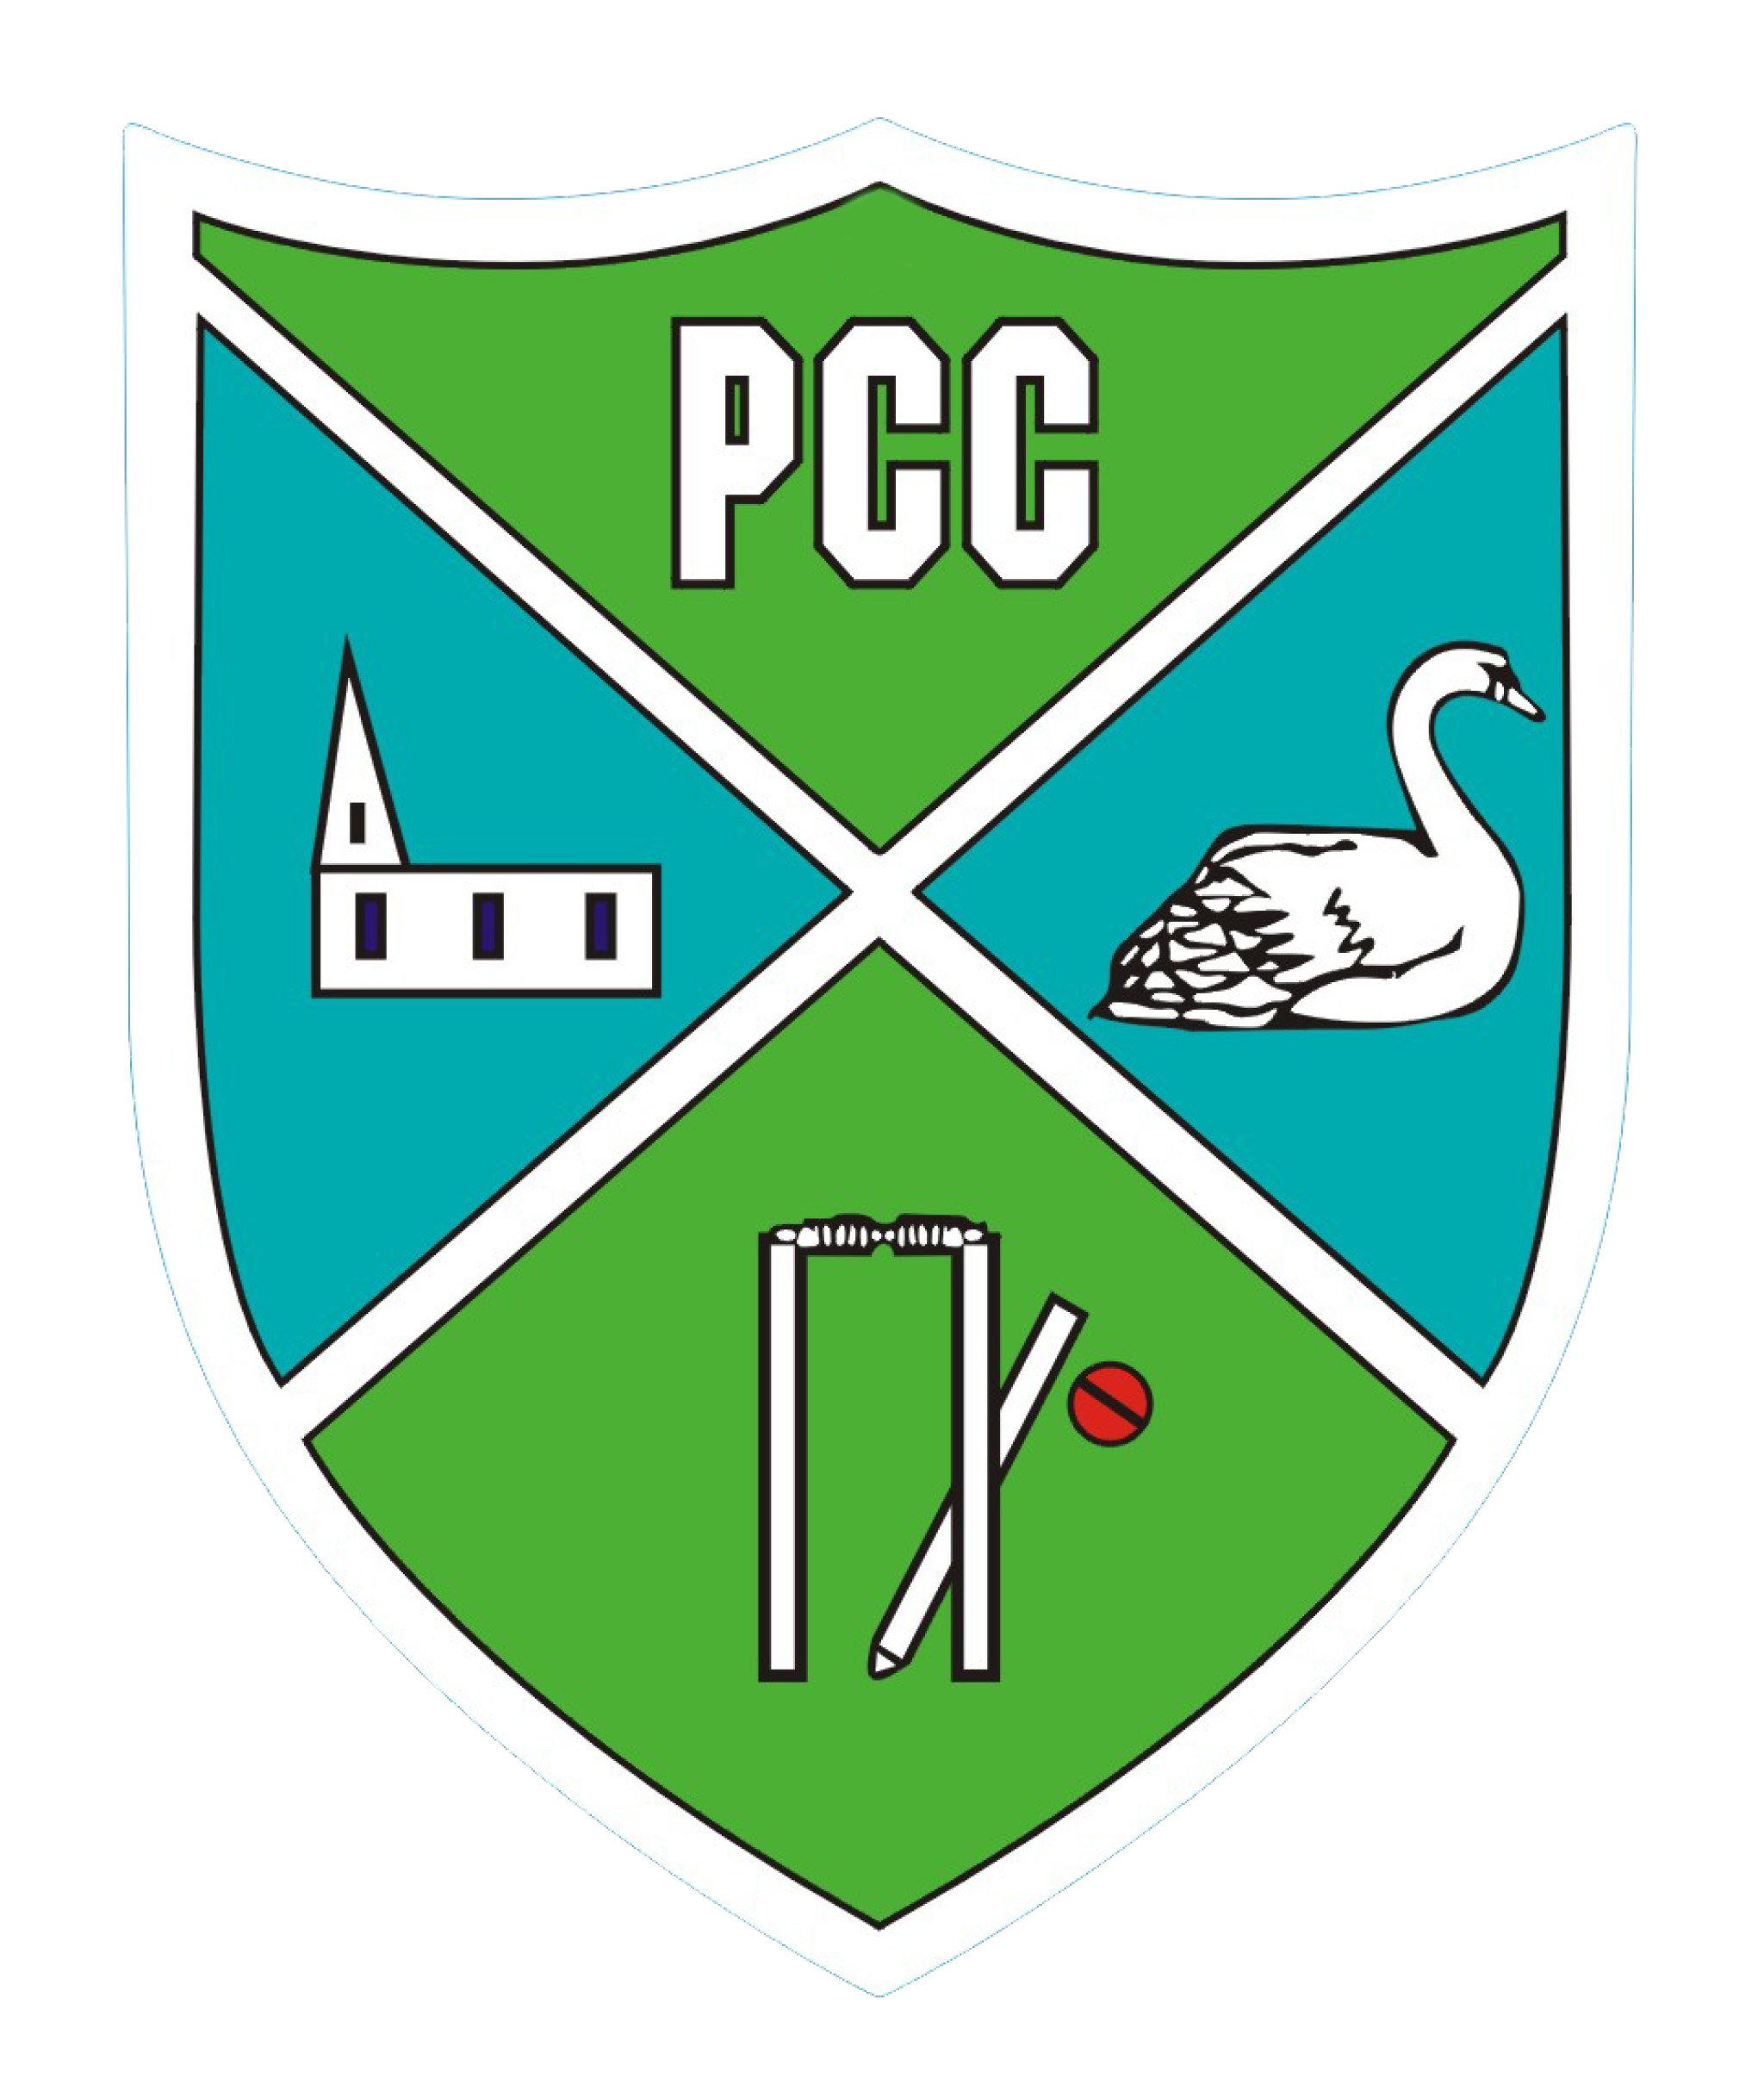 PCC logo.png